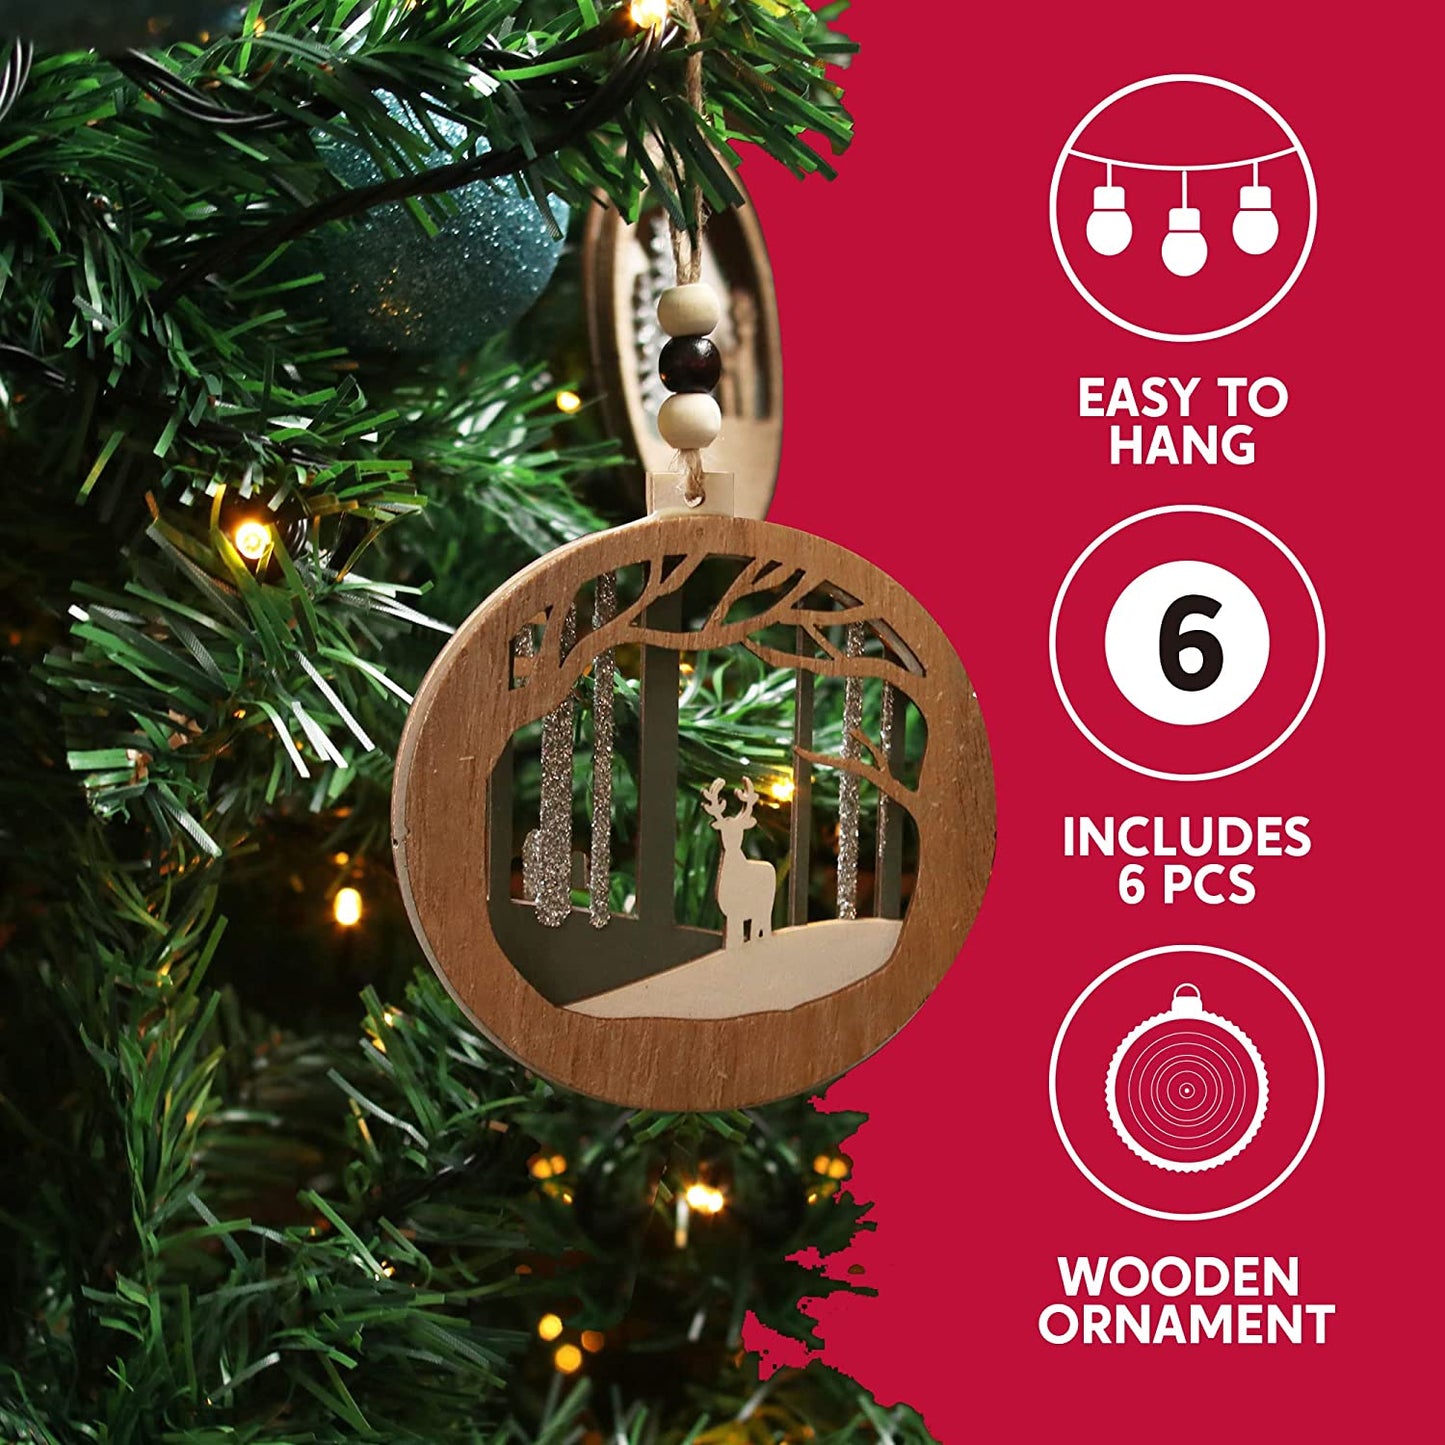 6 Pcs Wooden Christmas Hanging Ornaments